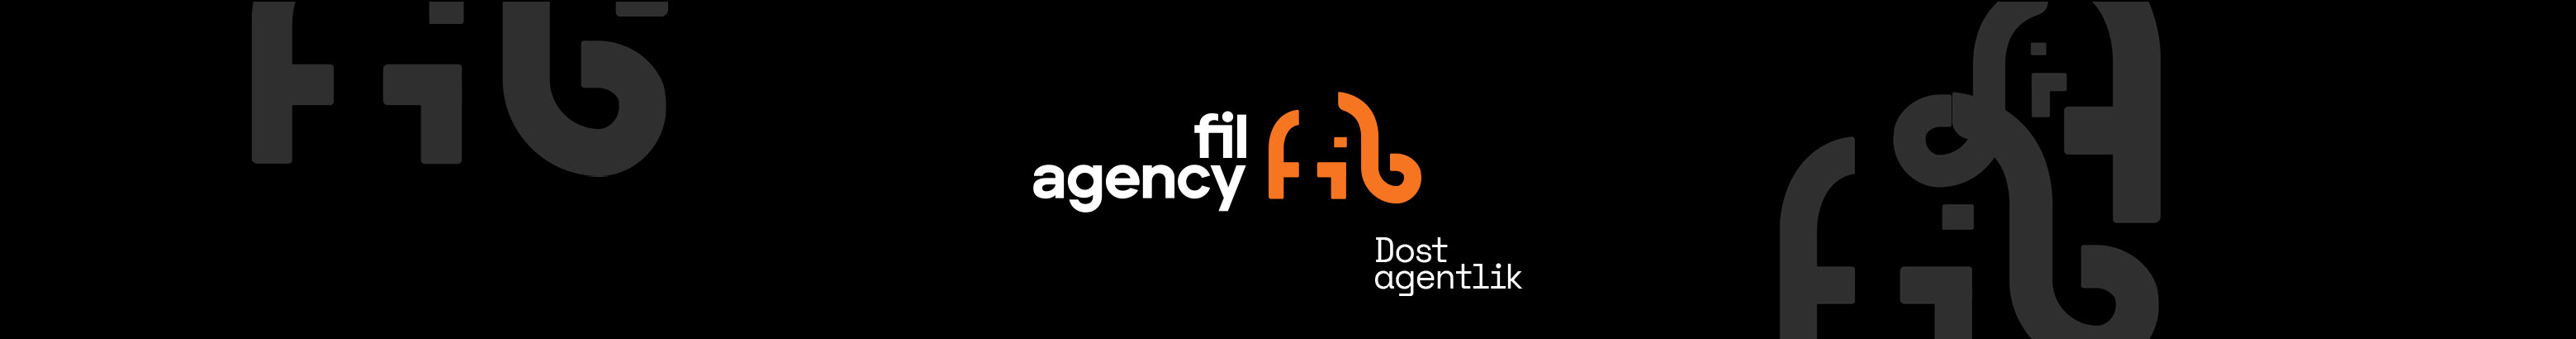 Fil Agency's profile banner